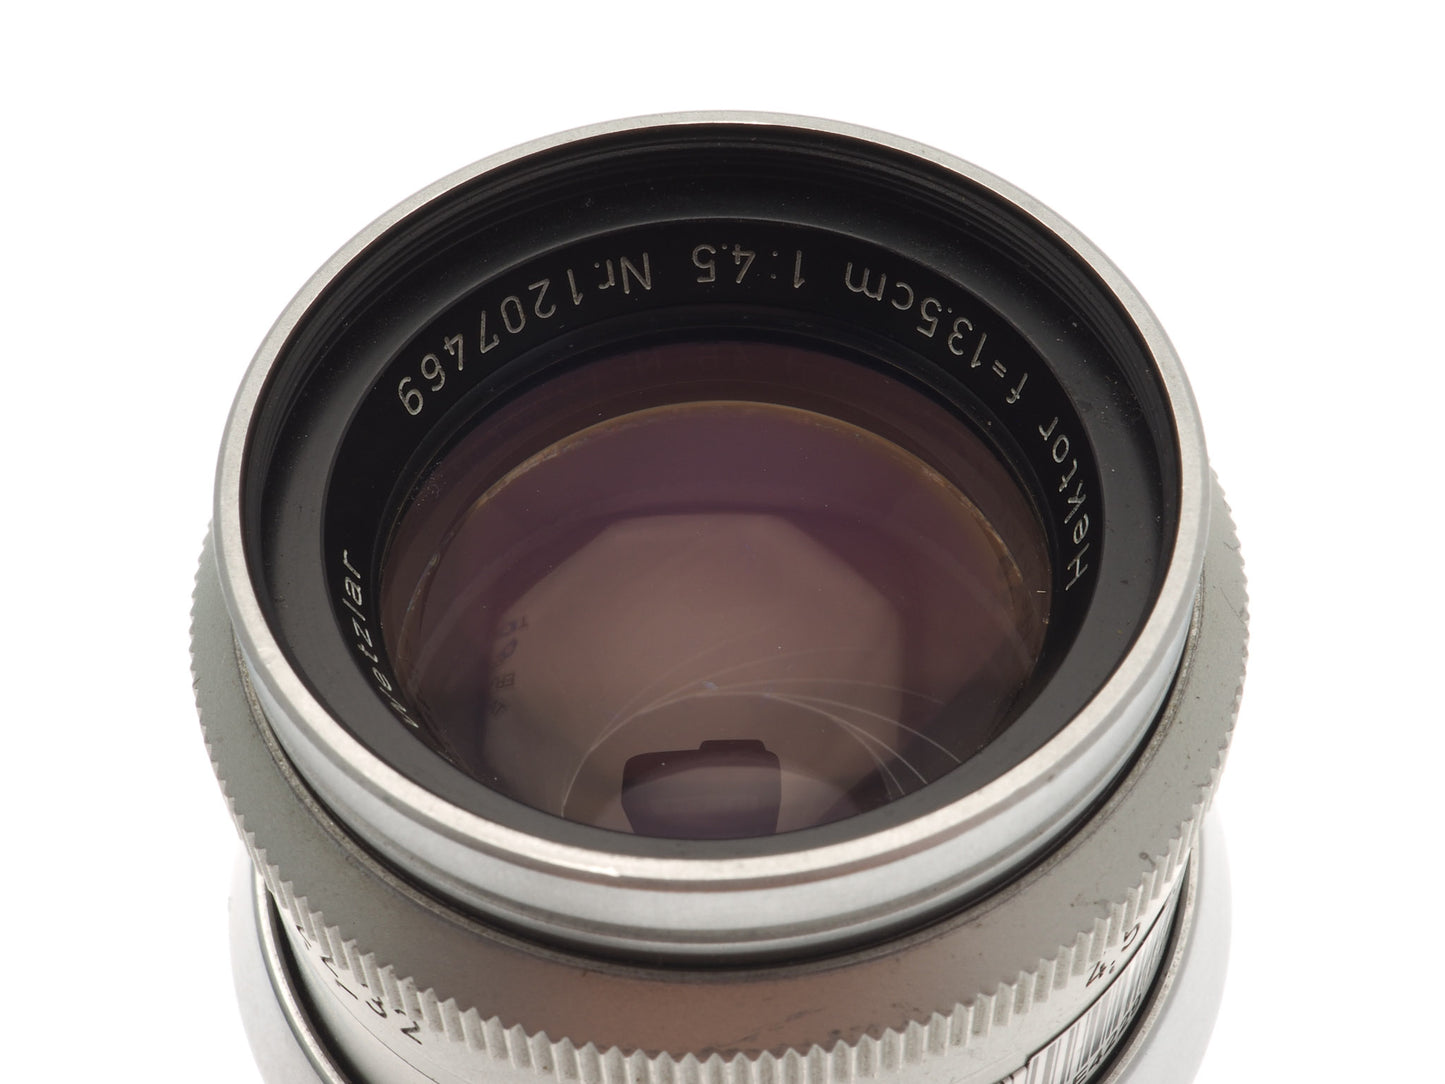 Leica 13.5cm f4.5 Hektor